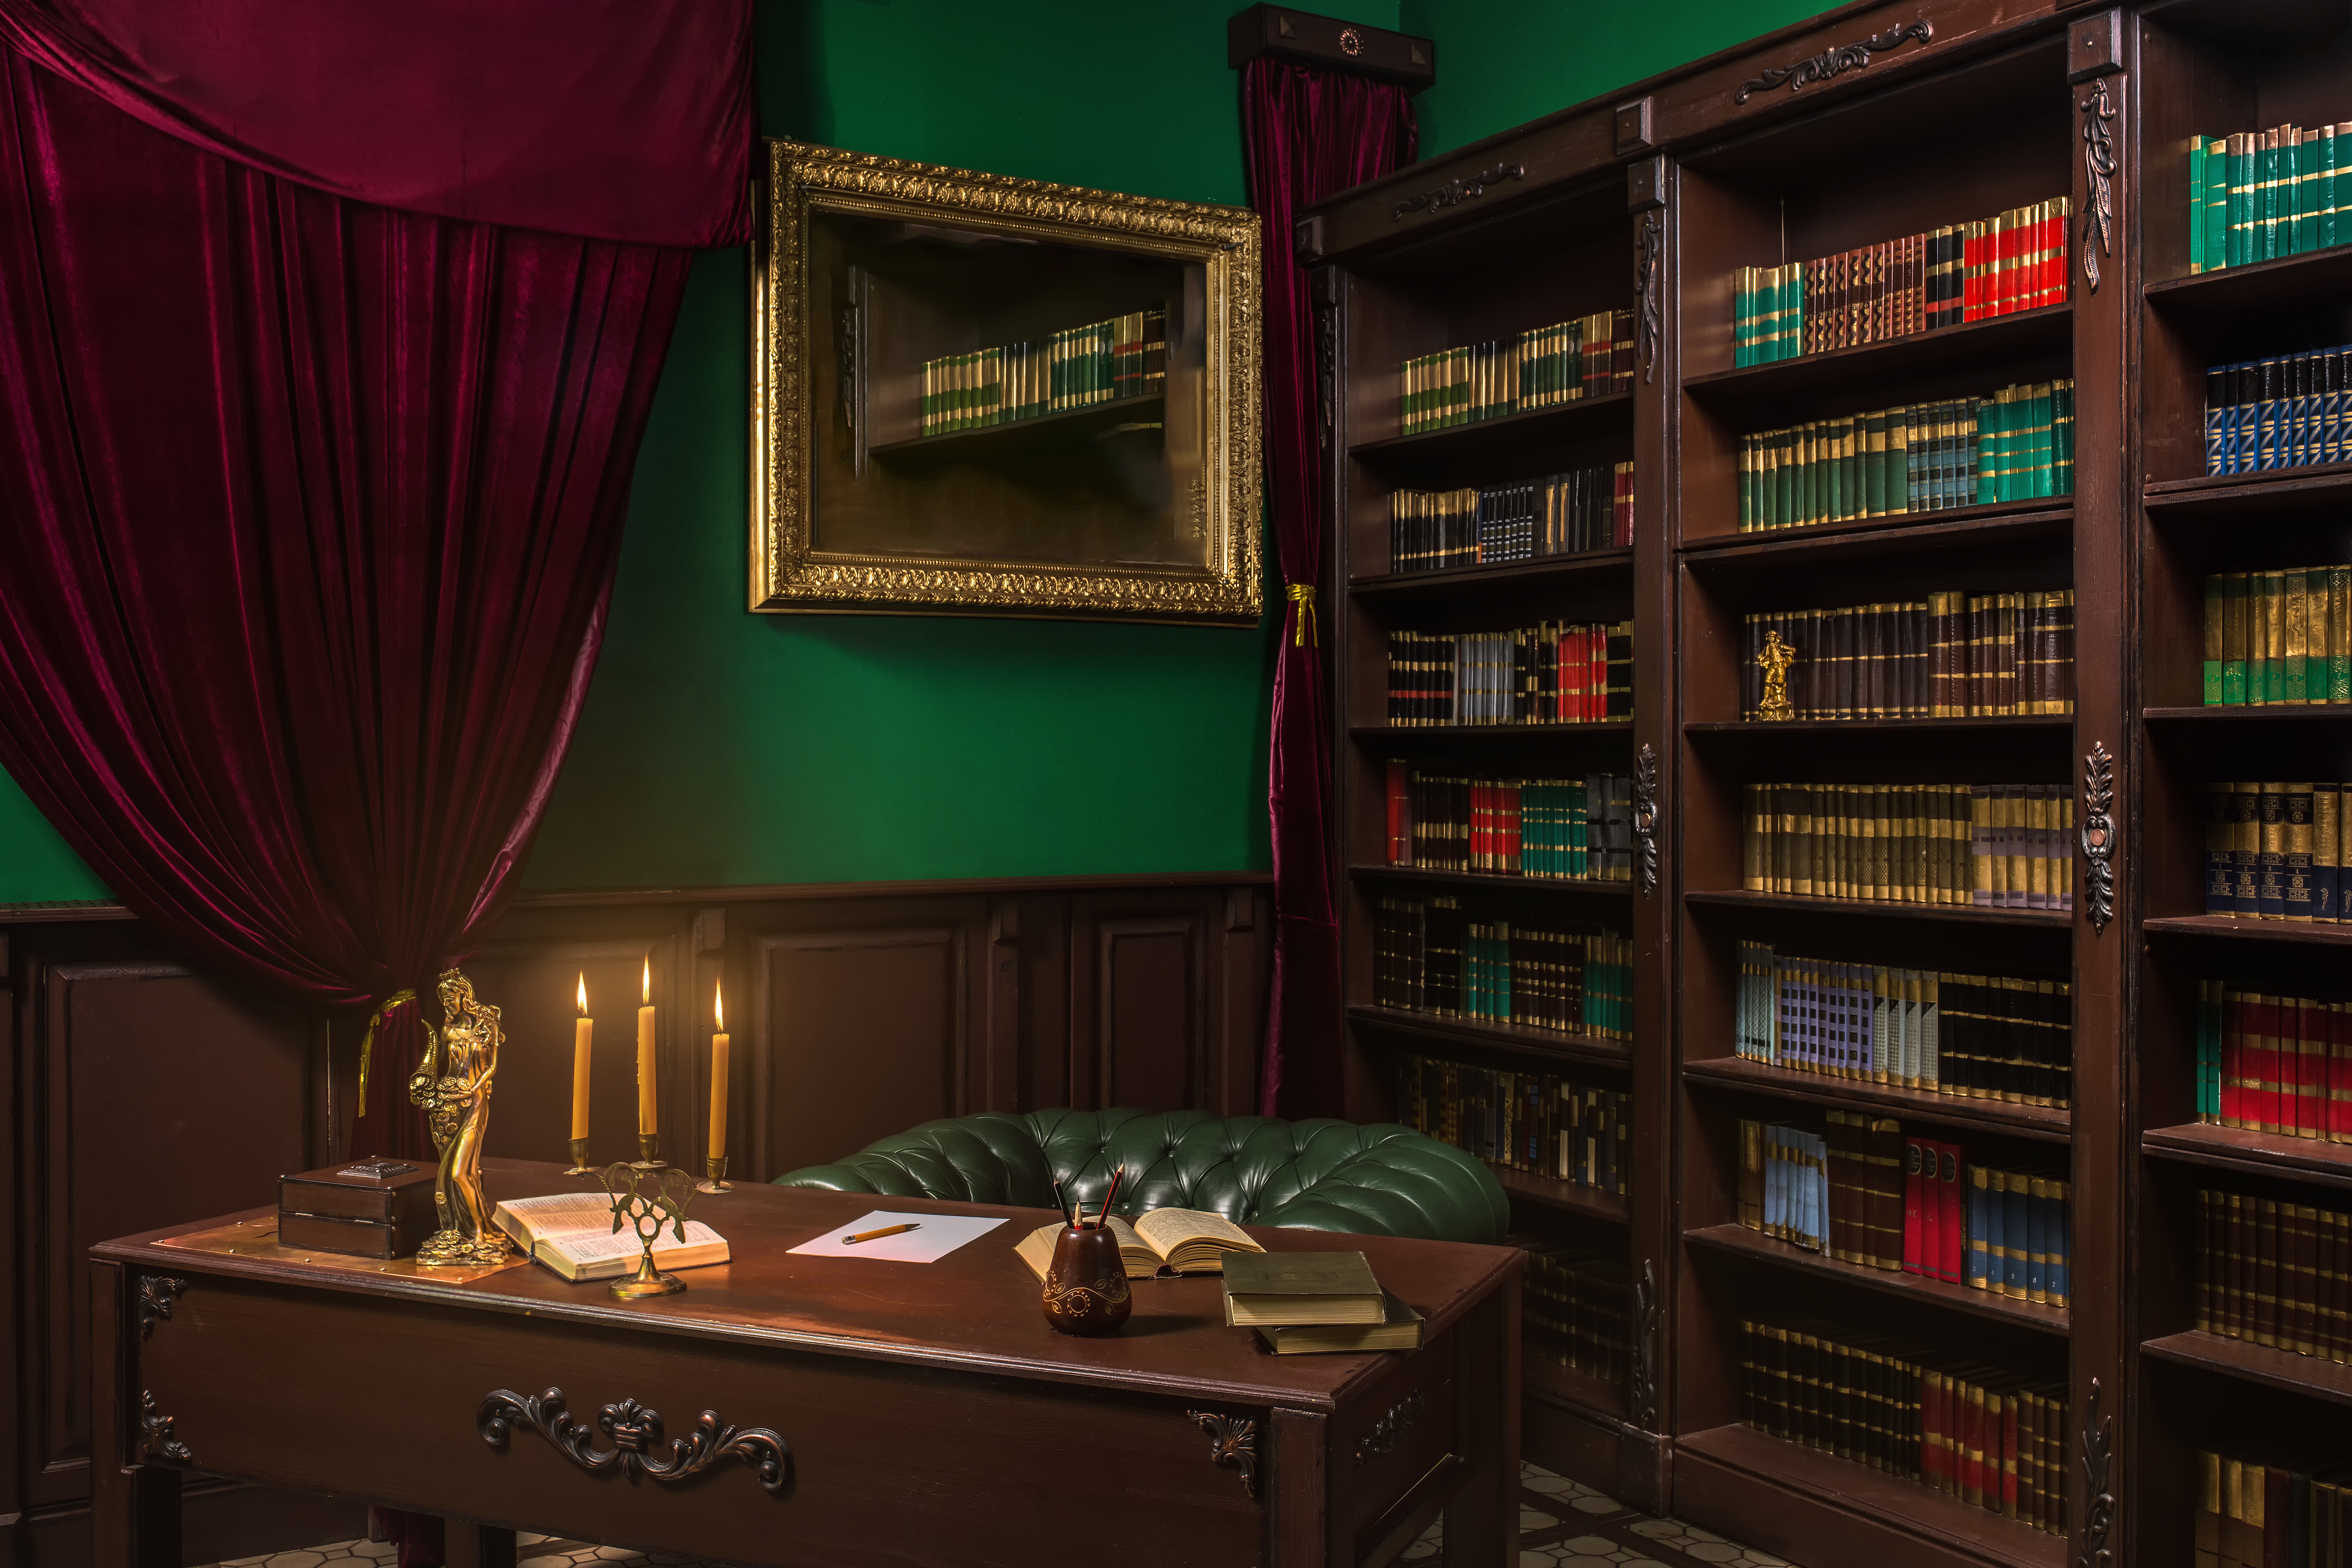 Library interior | Source: Shutterstock